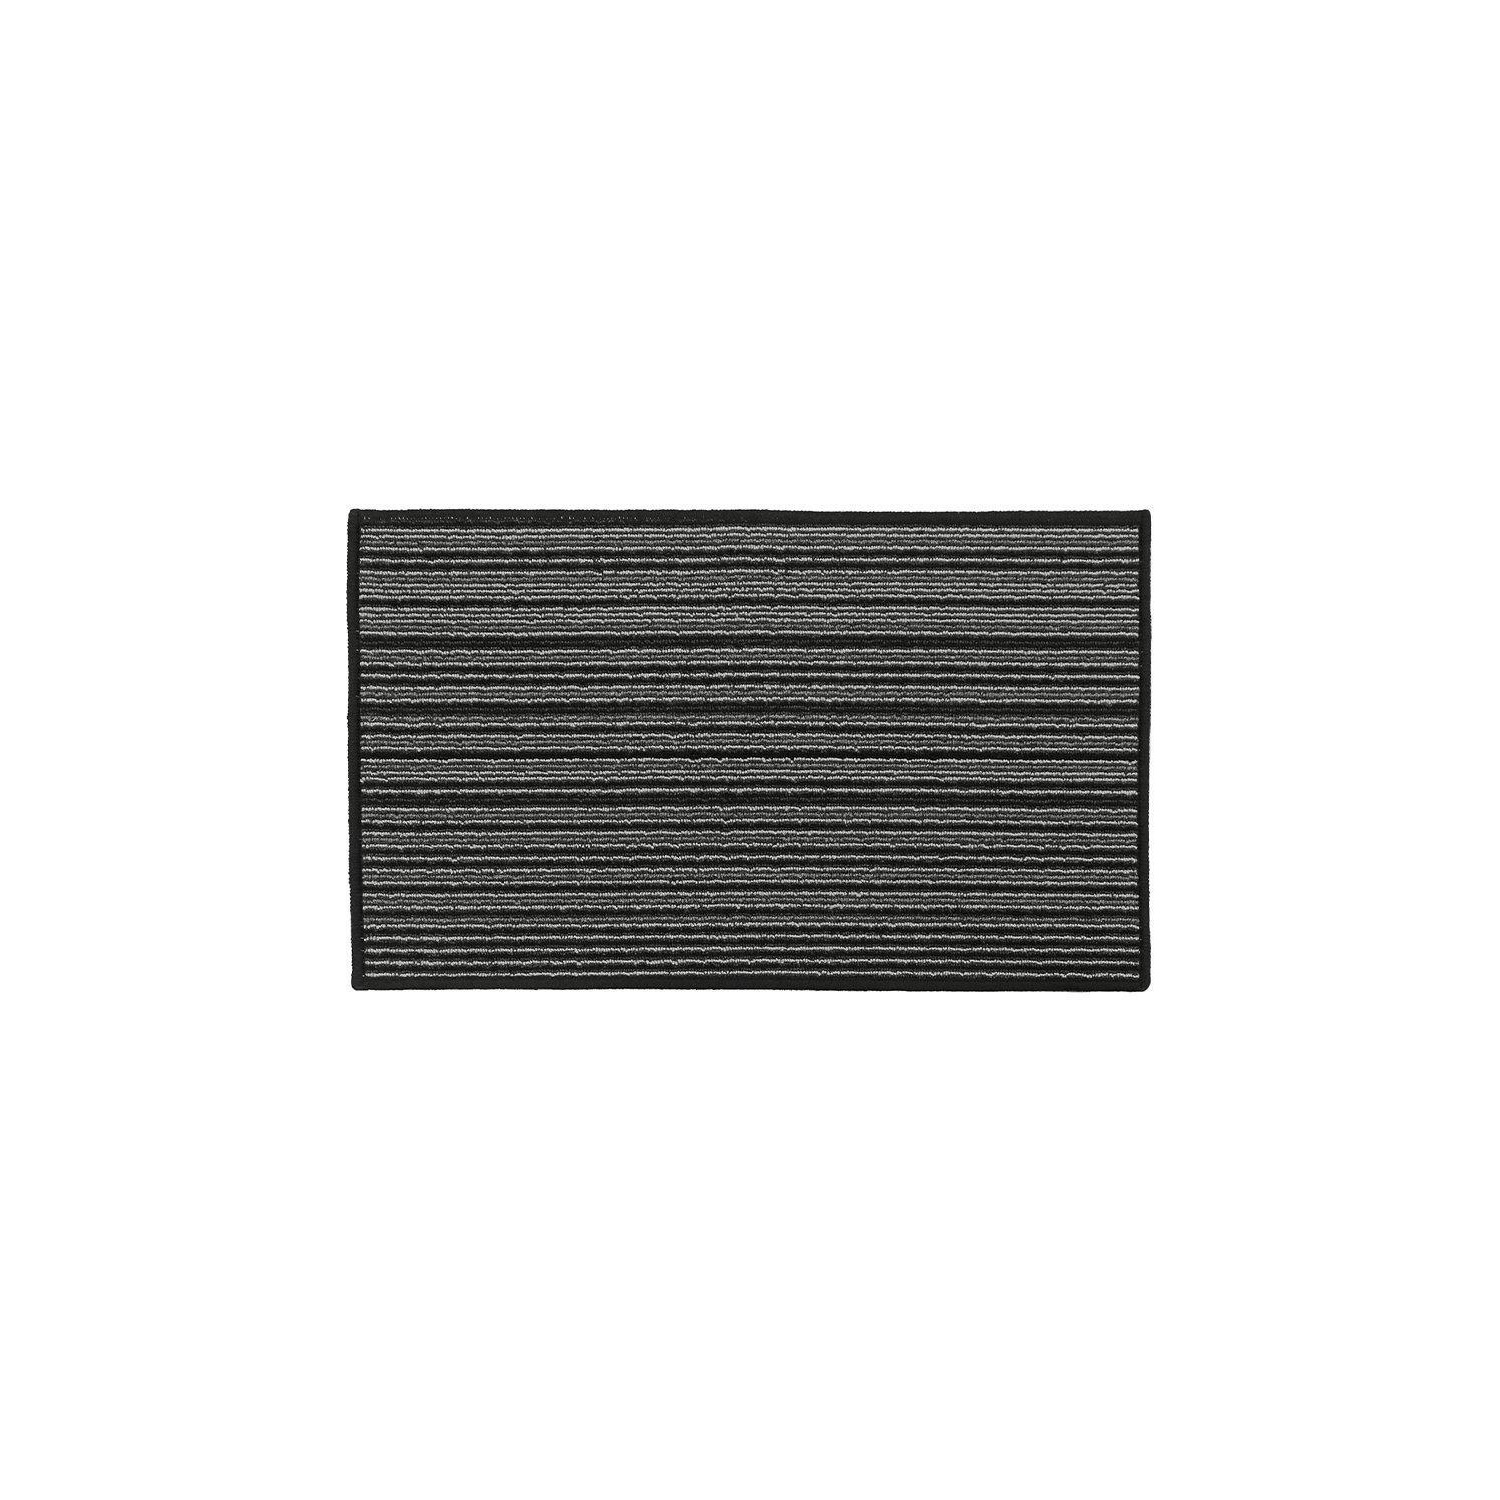 Arona Machine Washable Latex Backed Doormat, 50x80cm, Black - image 1